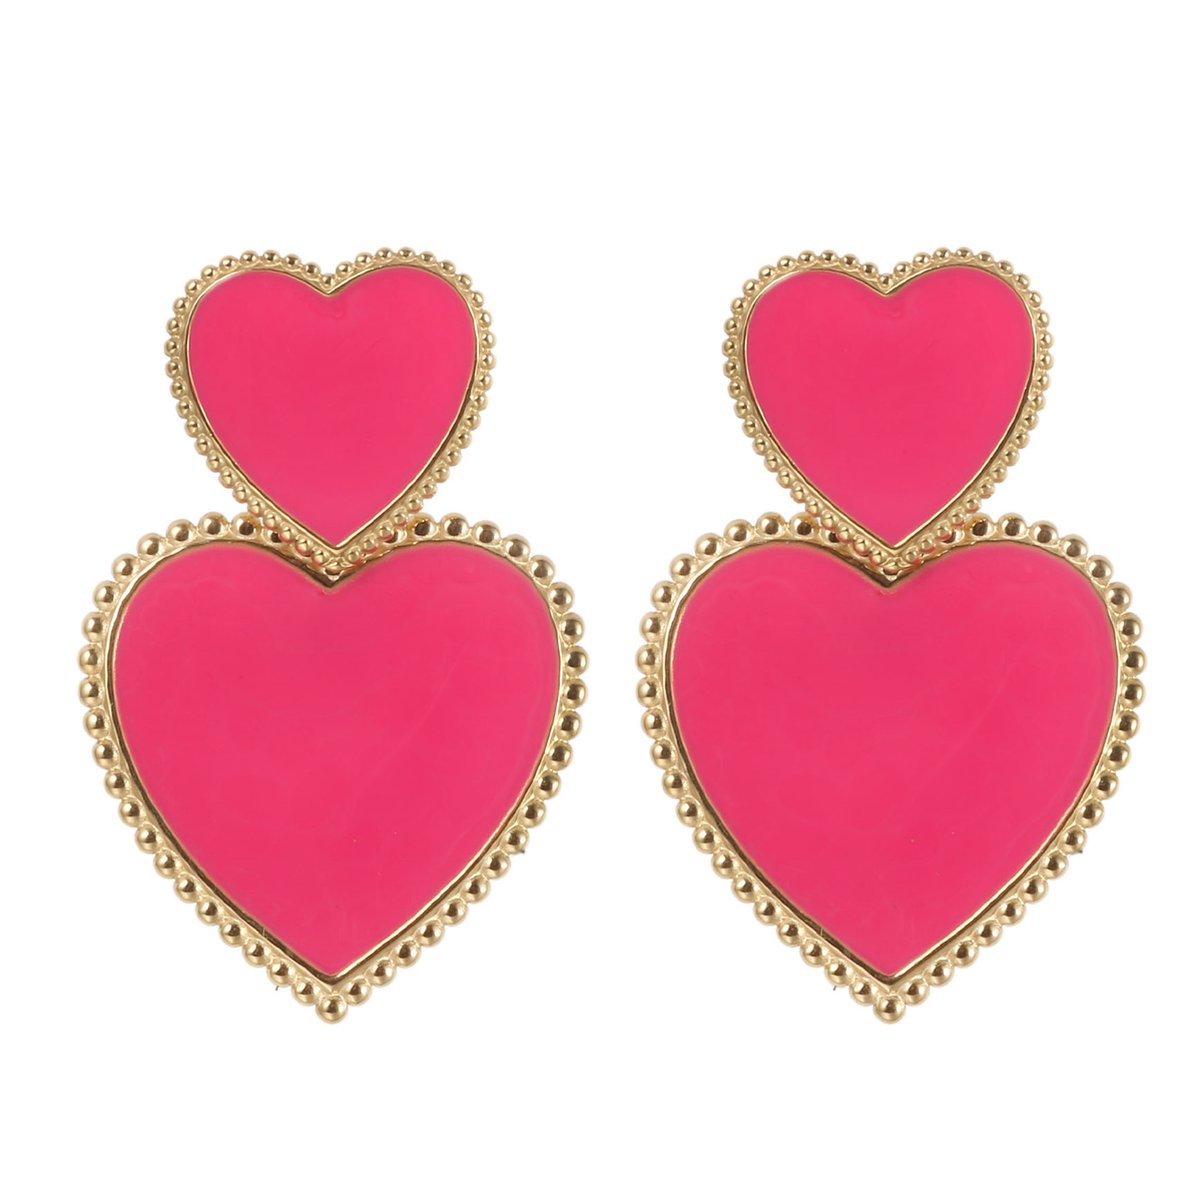 The Jewellery Club - Sanne heart earrings pink - Oorbellen - Dames oorbellen - Hart - Stainless steel - Goud - Roze - 5,3 cm - The Jewellery Club